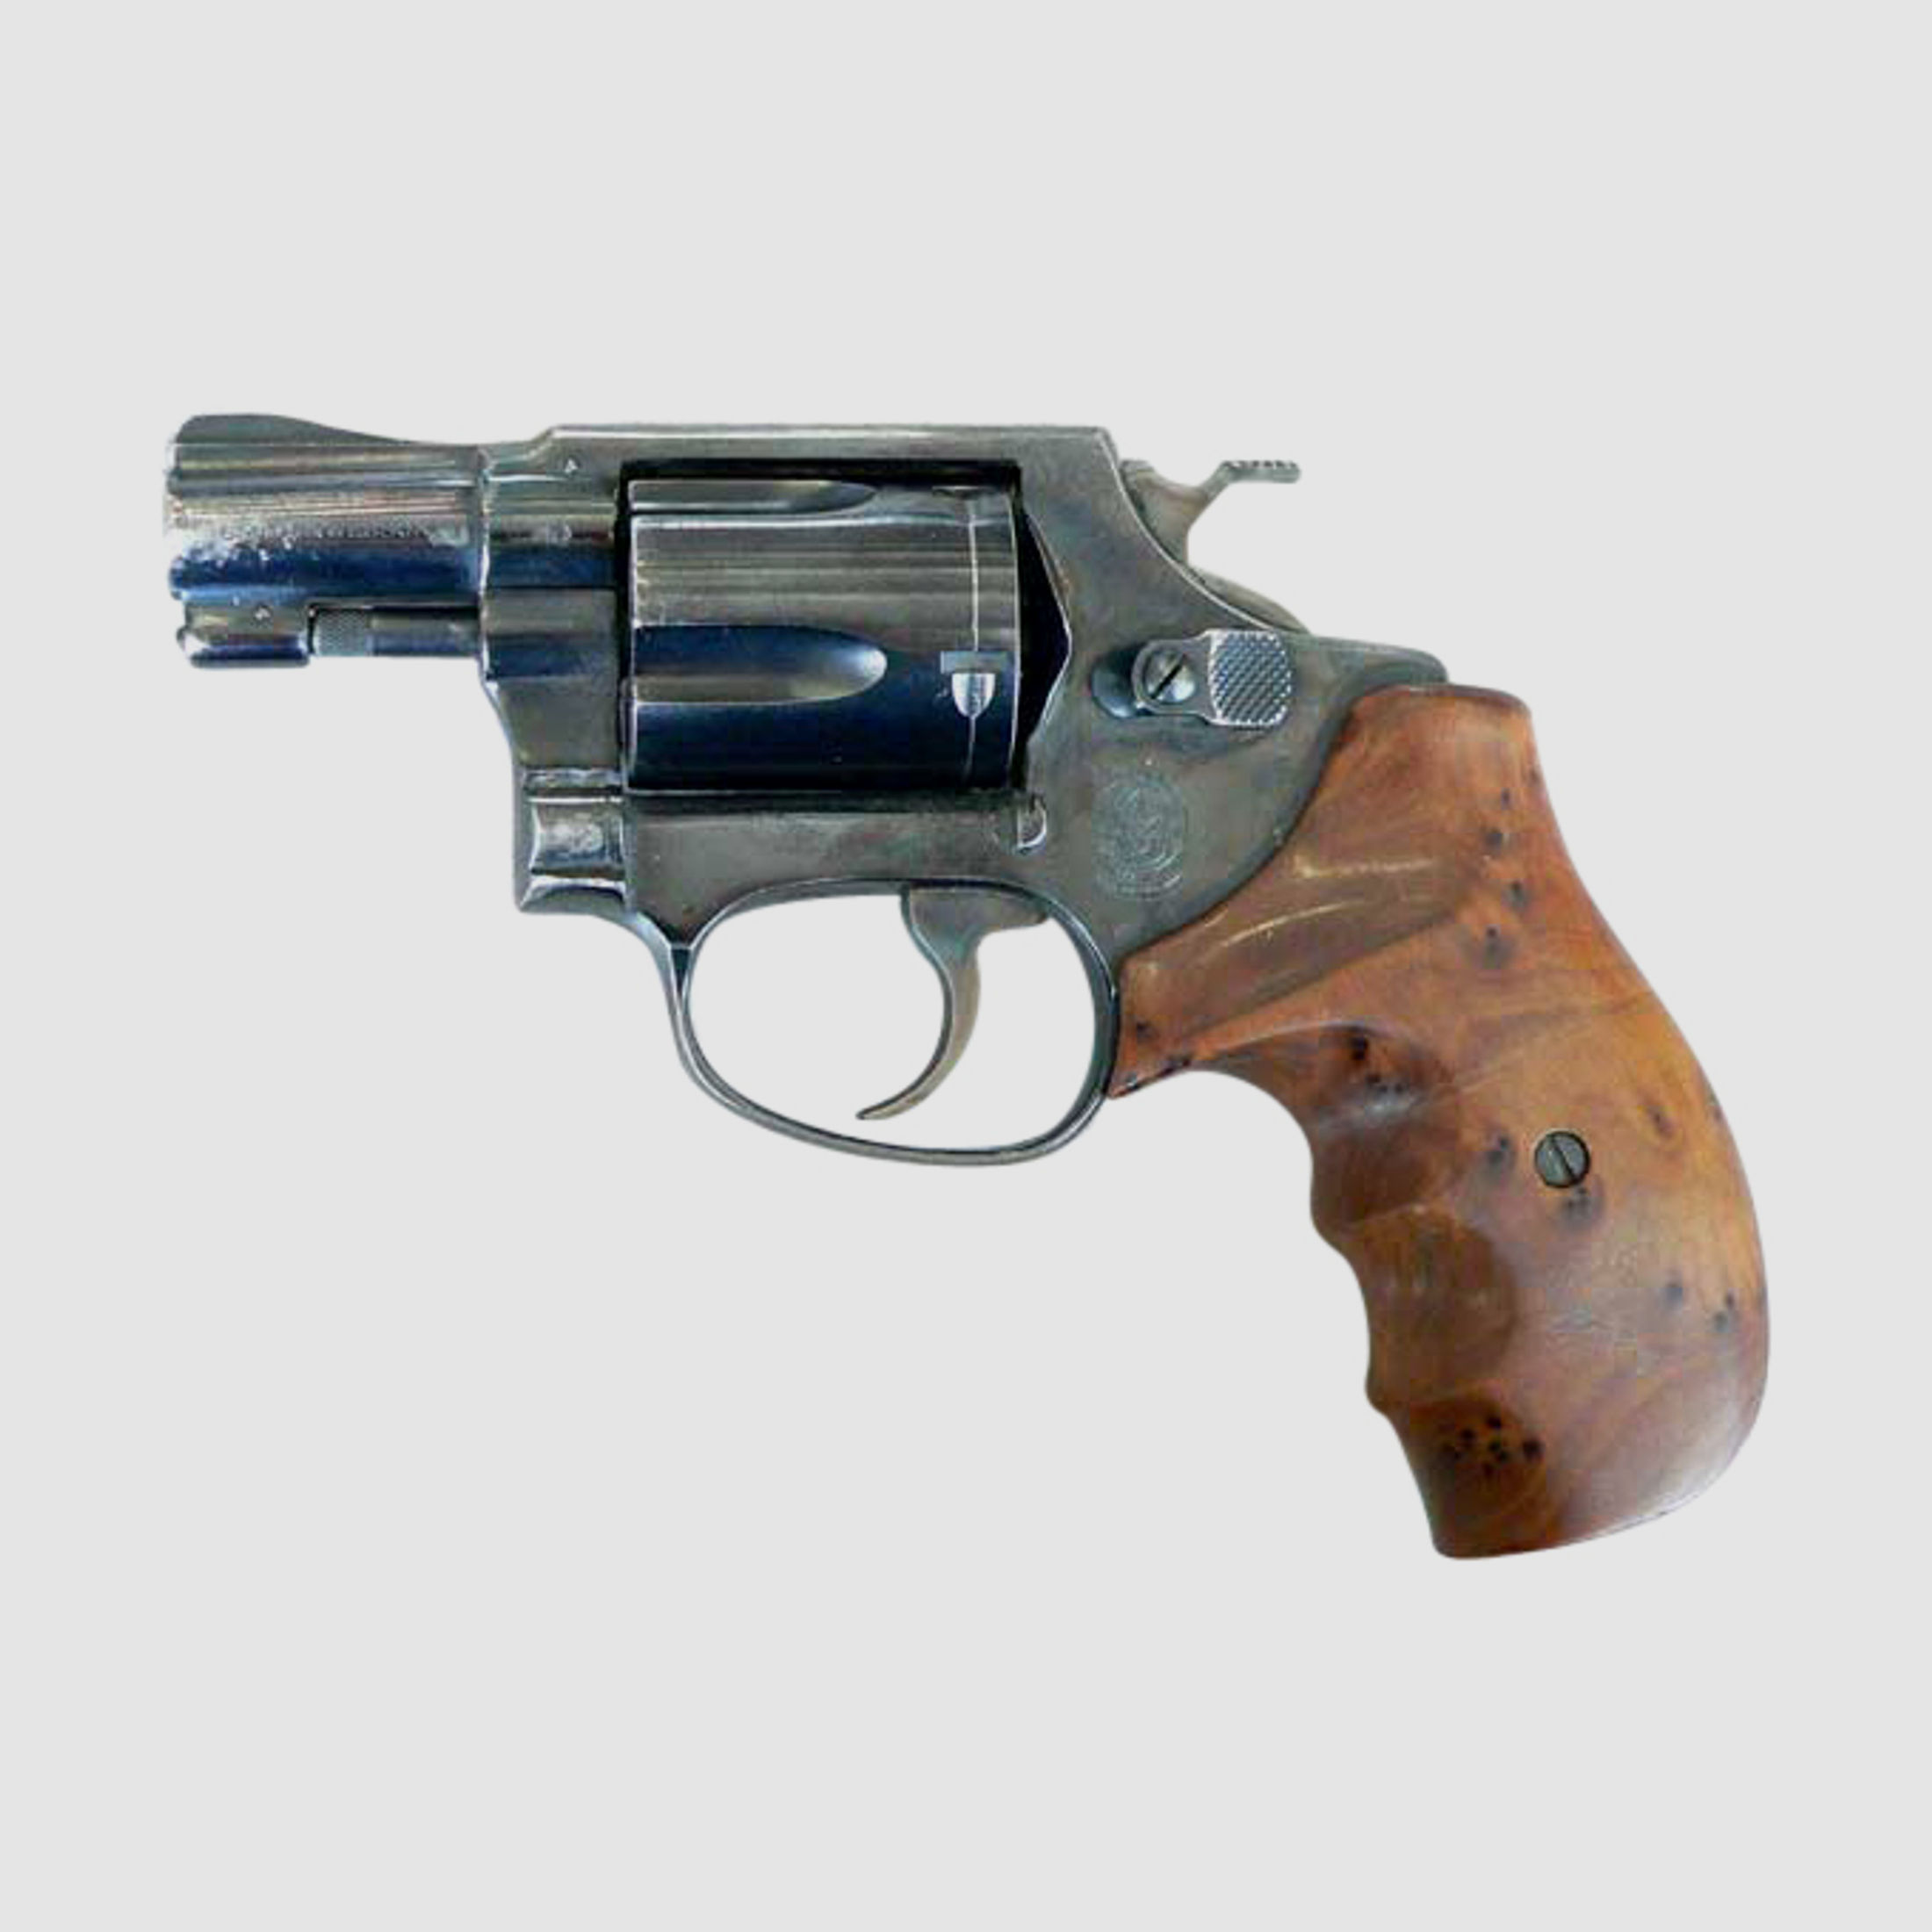 Doppel-Action Revolver Smith & Wesson Mod. 36, Kaliber .38 Spez.